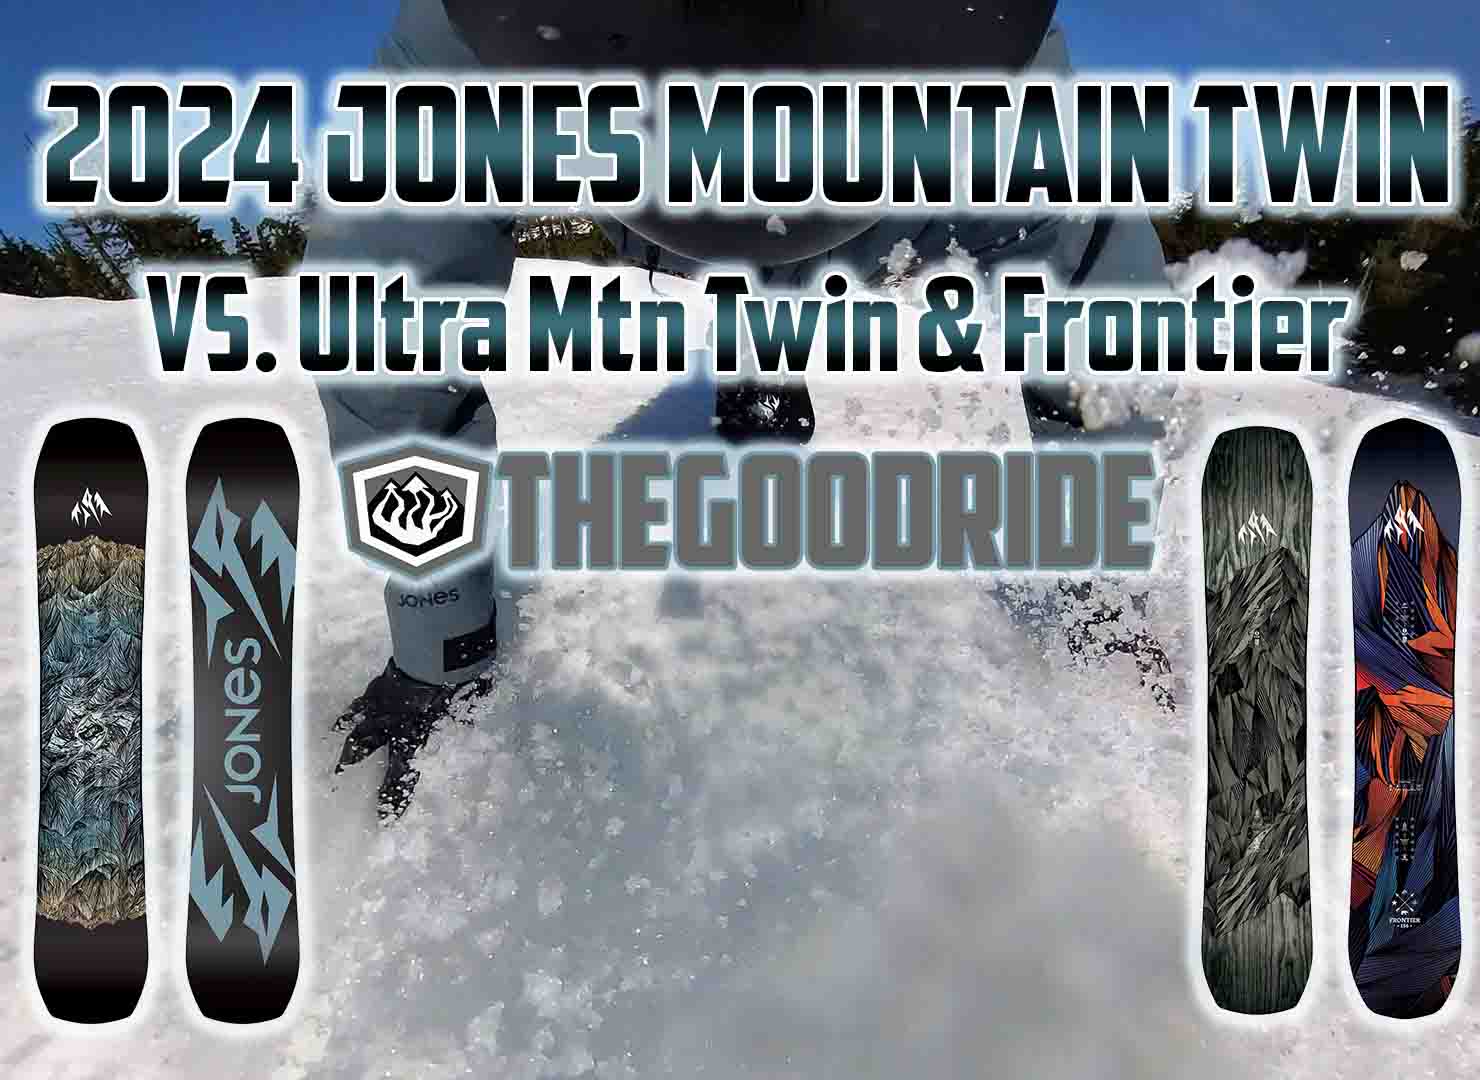 Jones Mountain Twin 2011-2024 Snowboard Review